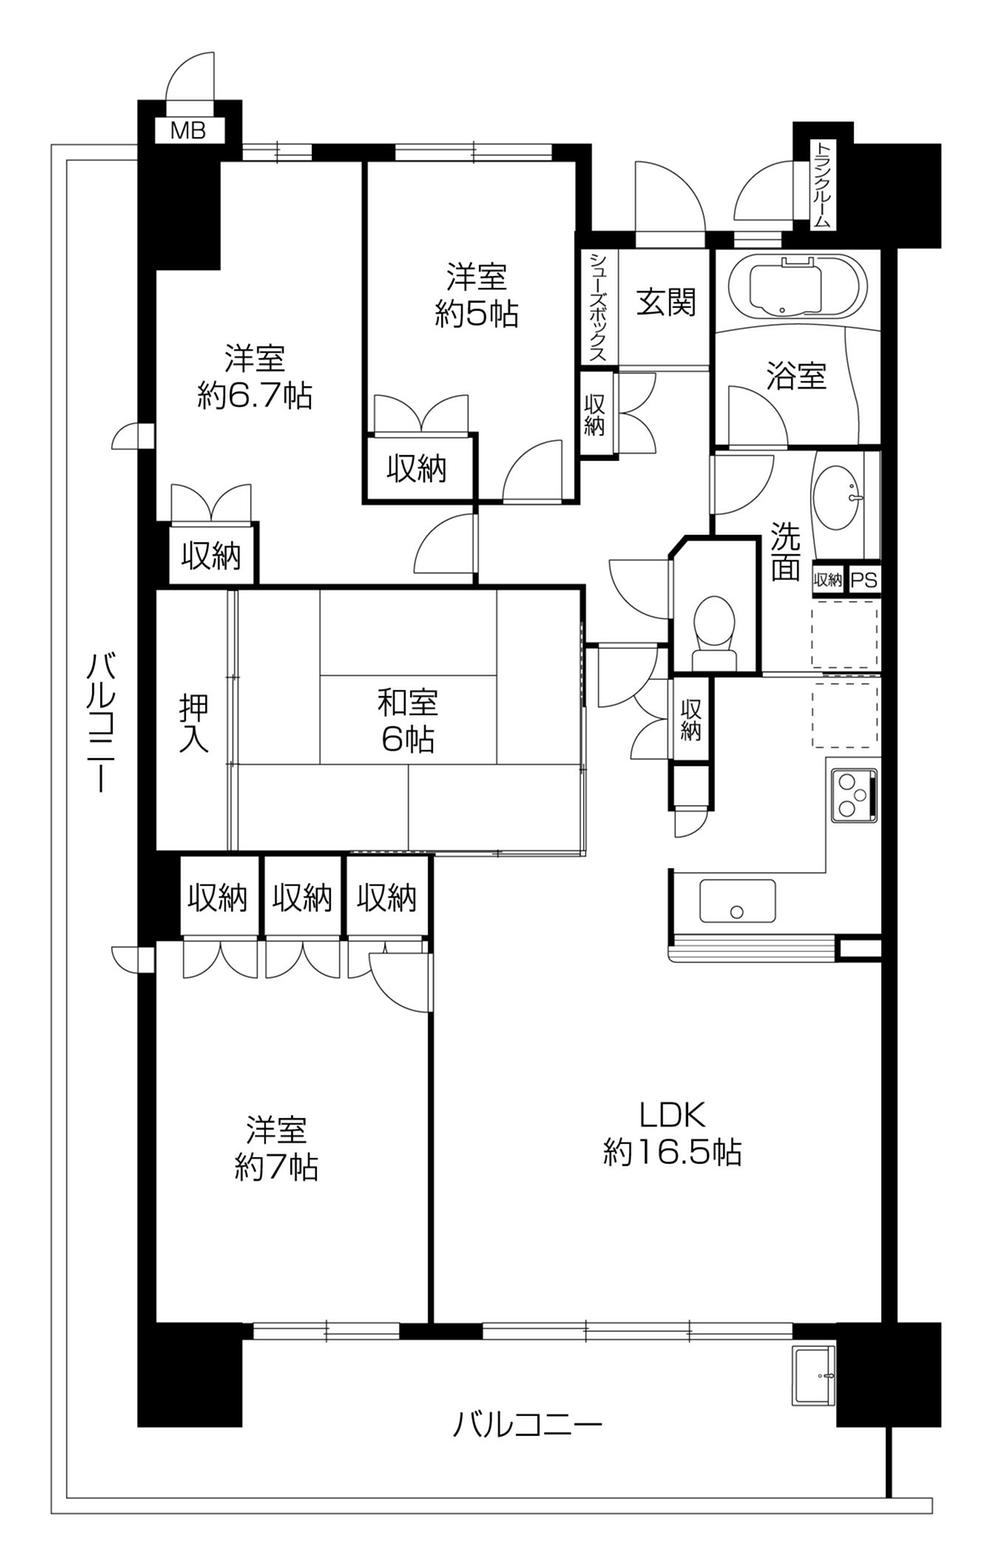 Floor plan. 4LDK, Price 29,800,000 yen, Footprint 92.1 sq m , Balcony area 28.31 sq m 4LDK is rare